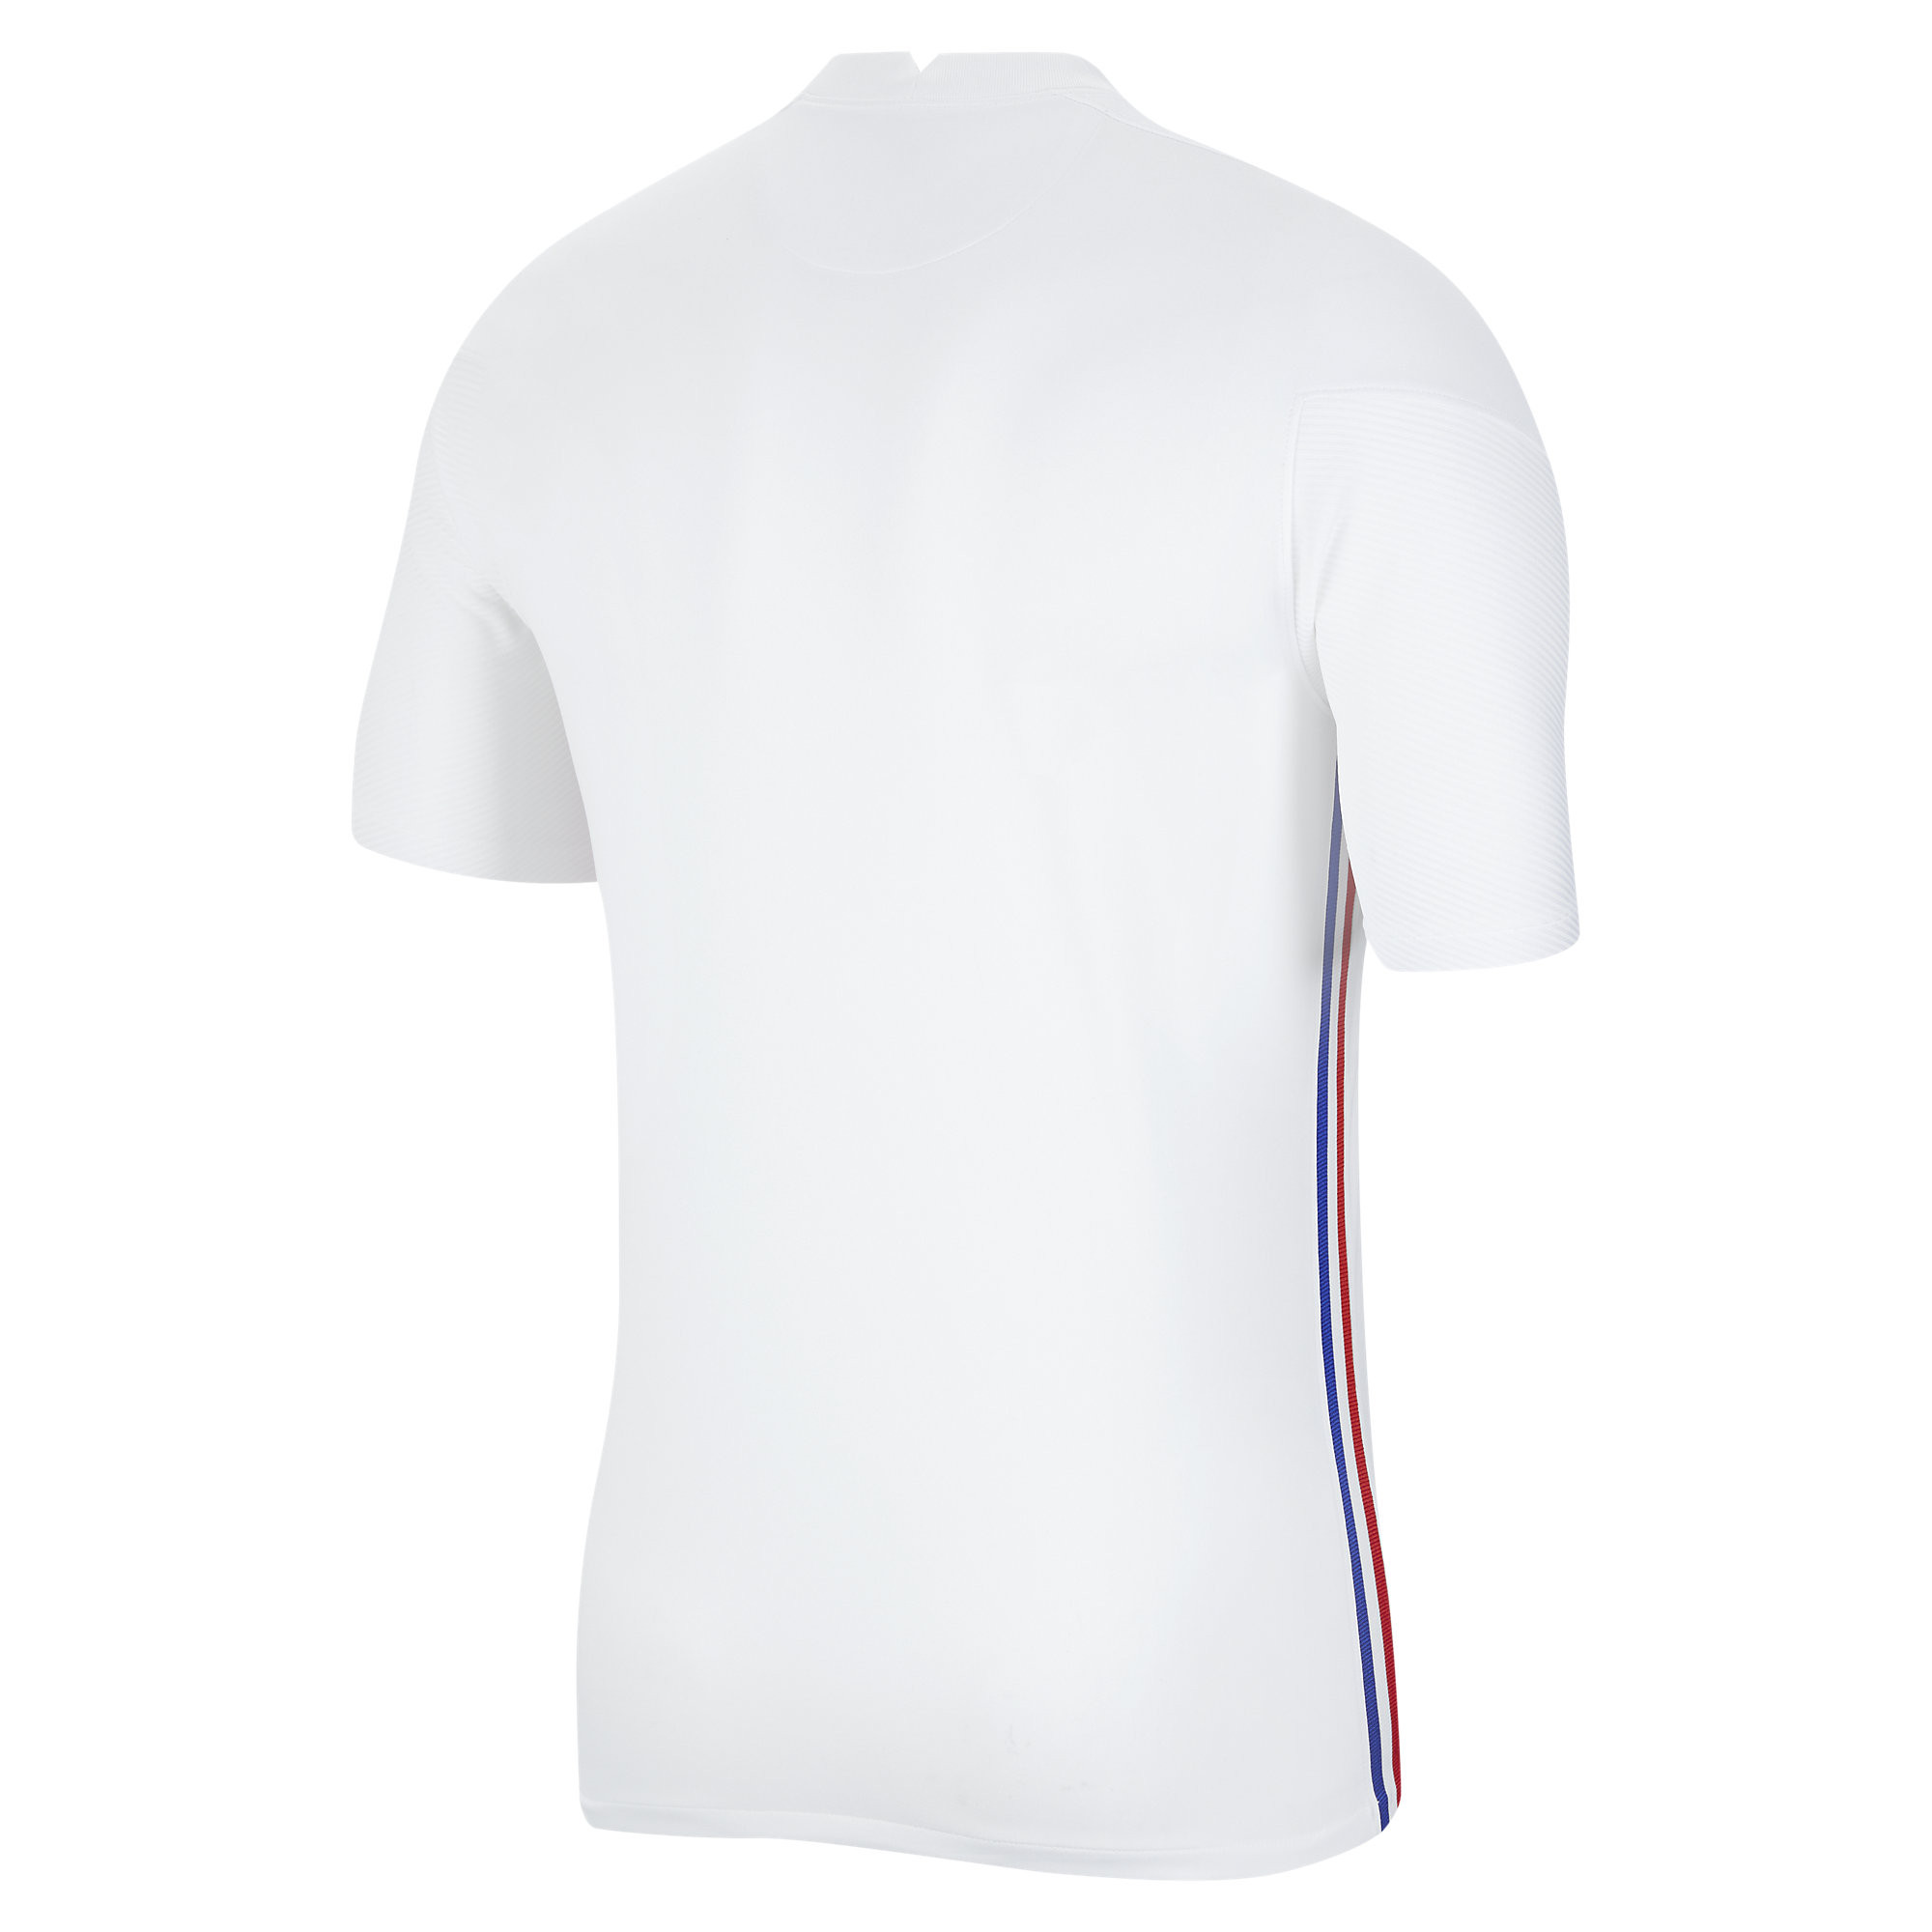 Nike France 2020 Away Jersey S